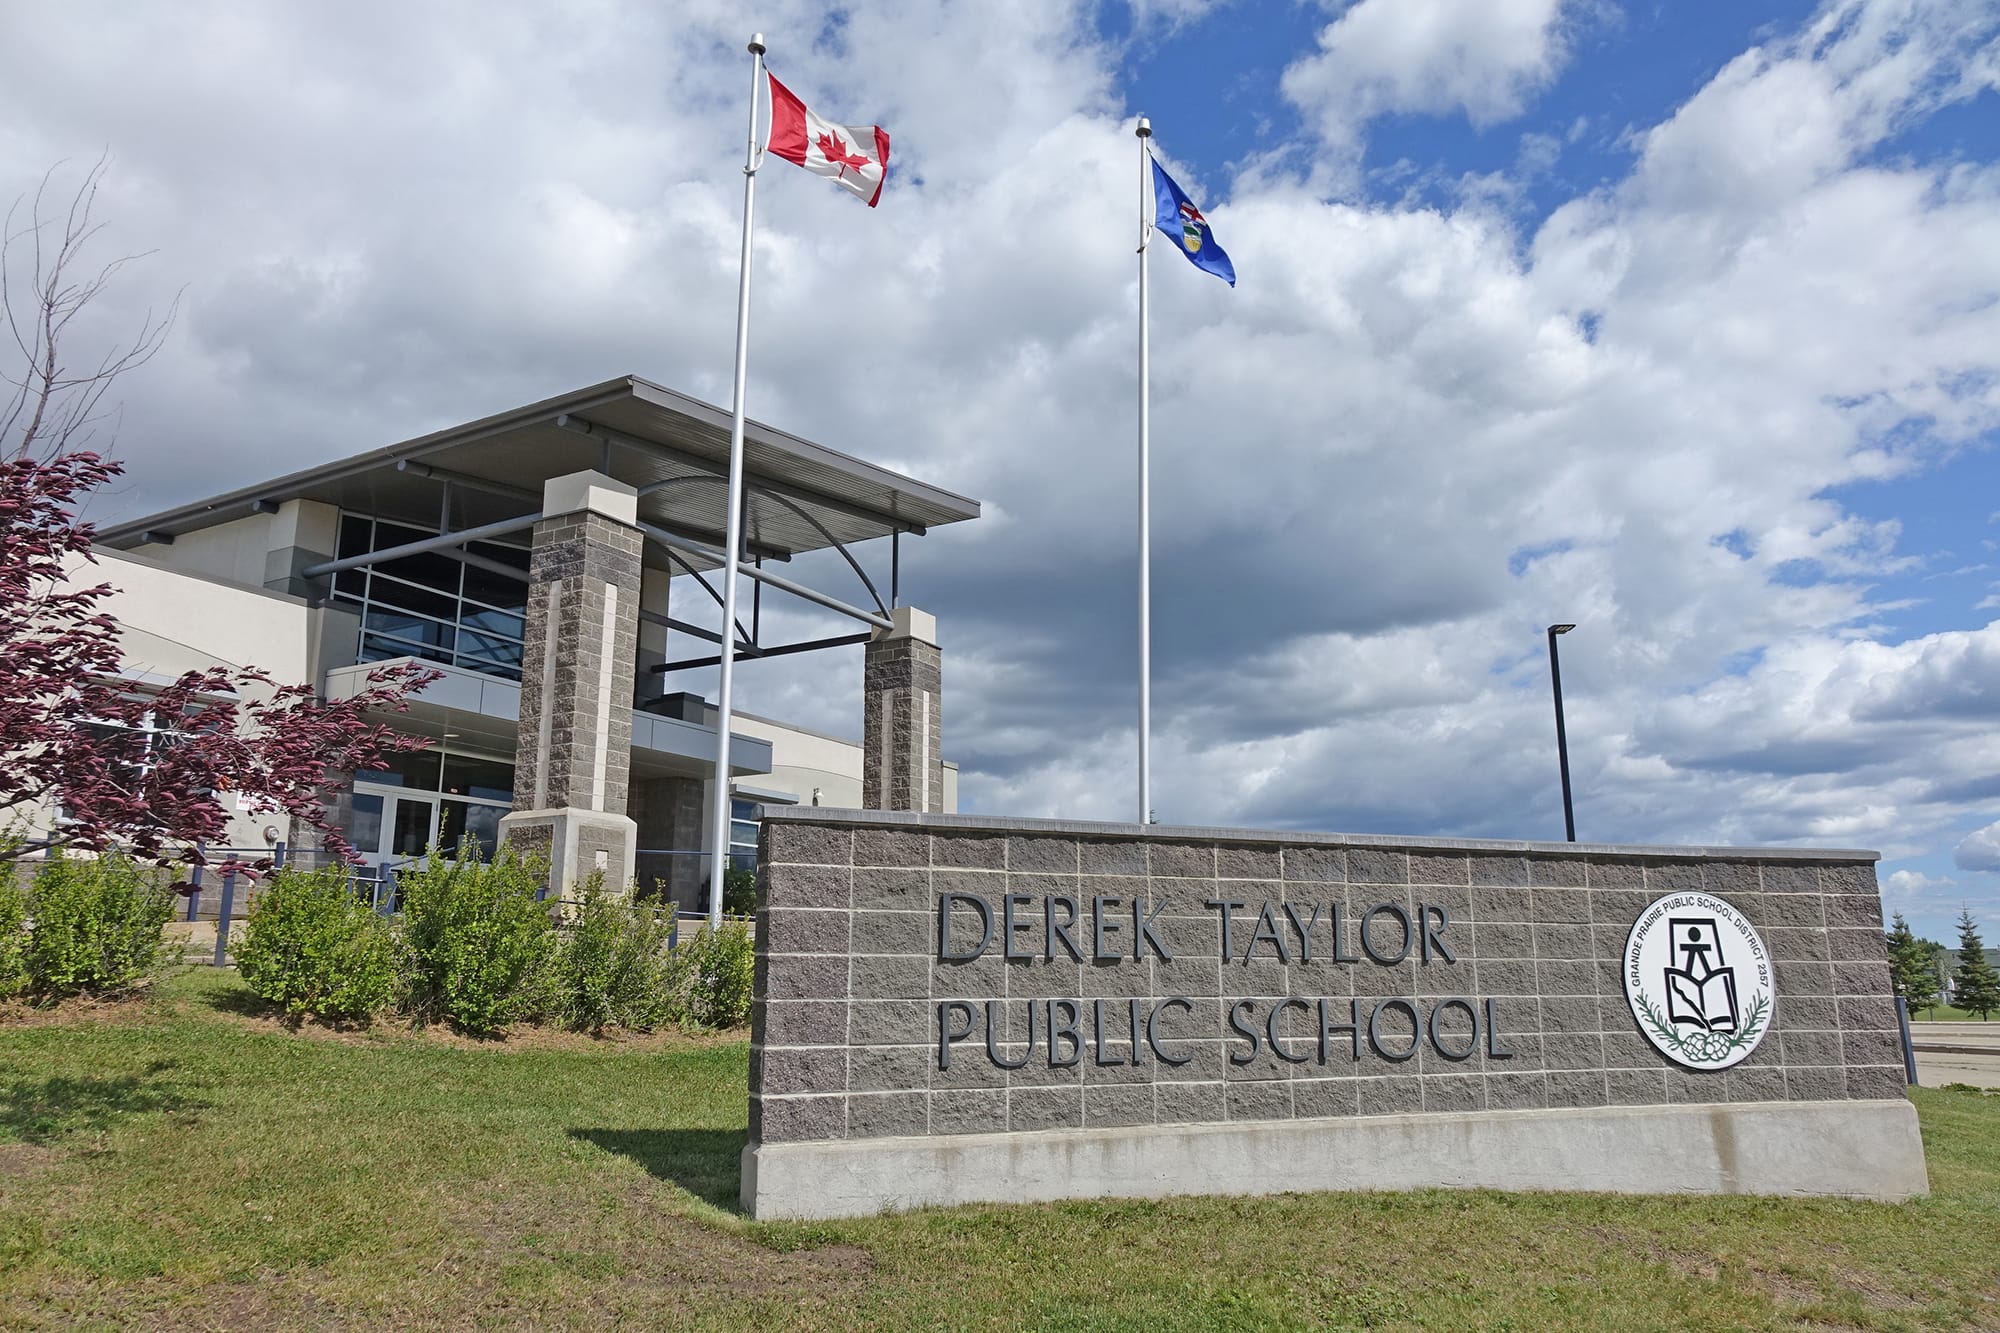 Derek Taylor Public School entrance